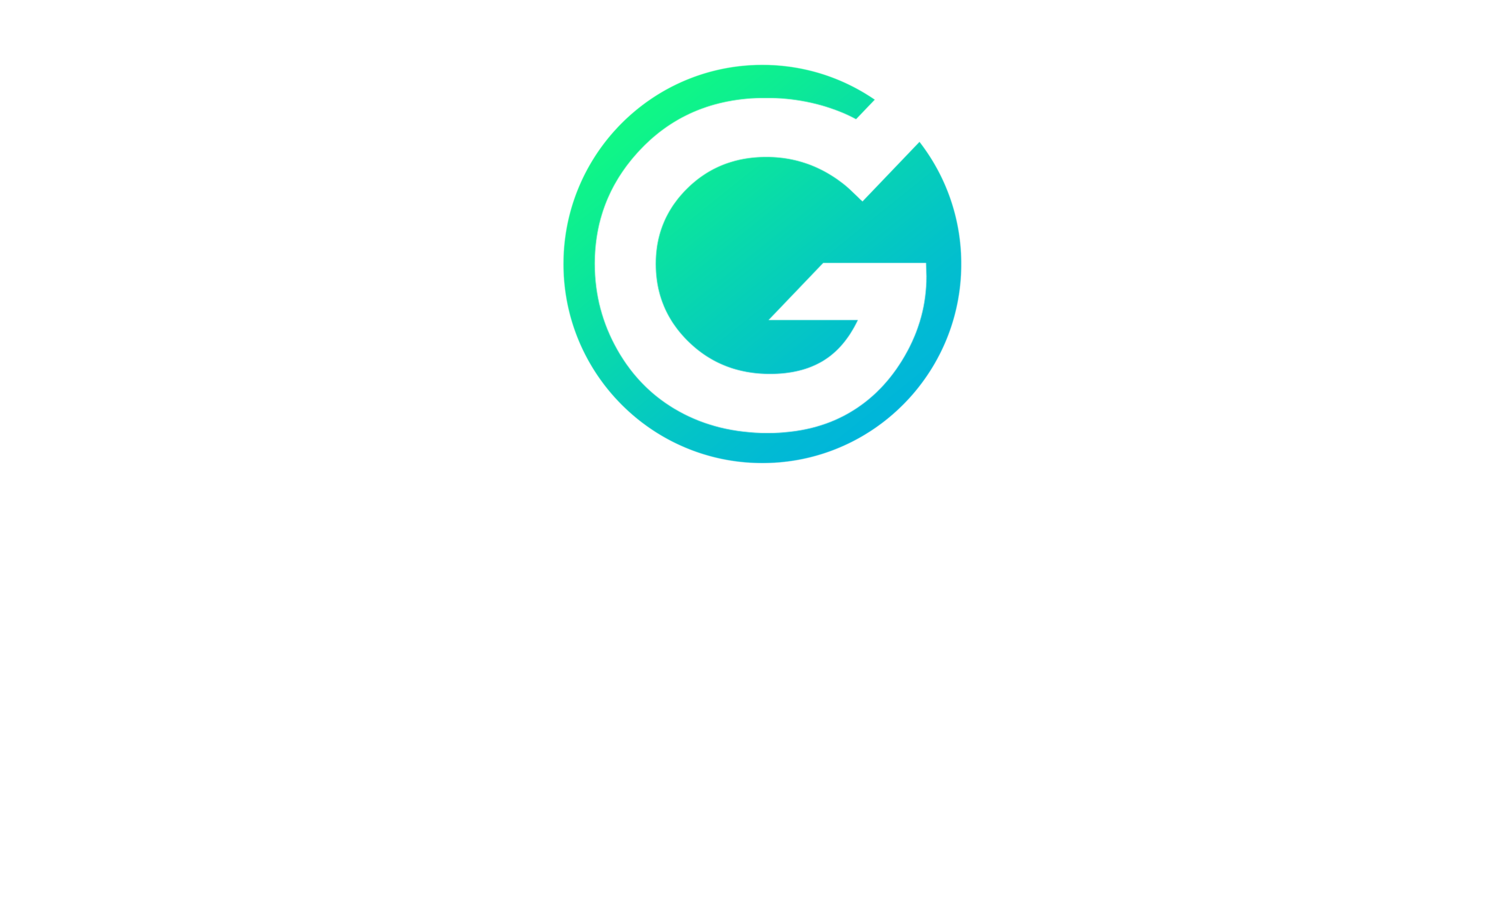 OMSETGO® Digital Marketing Specialist